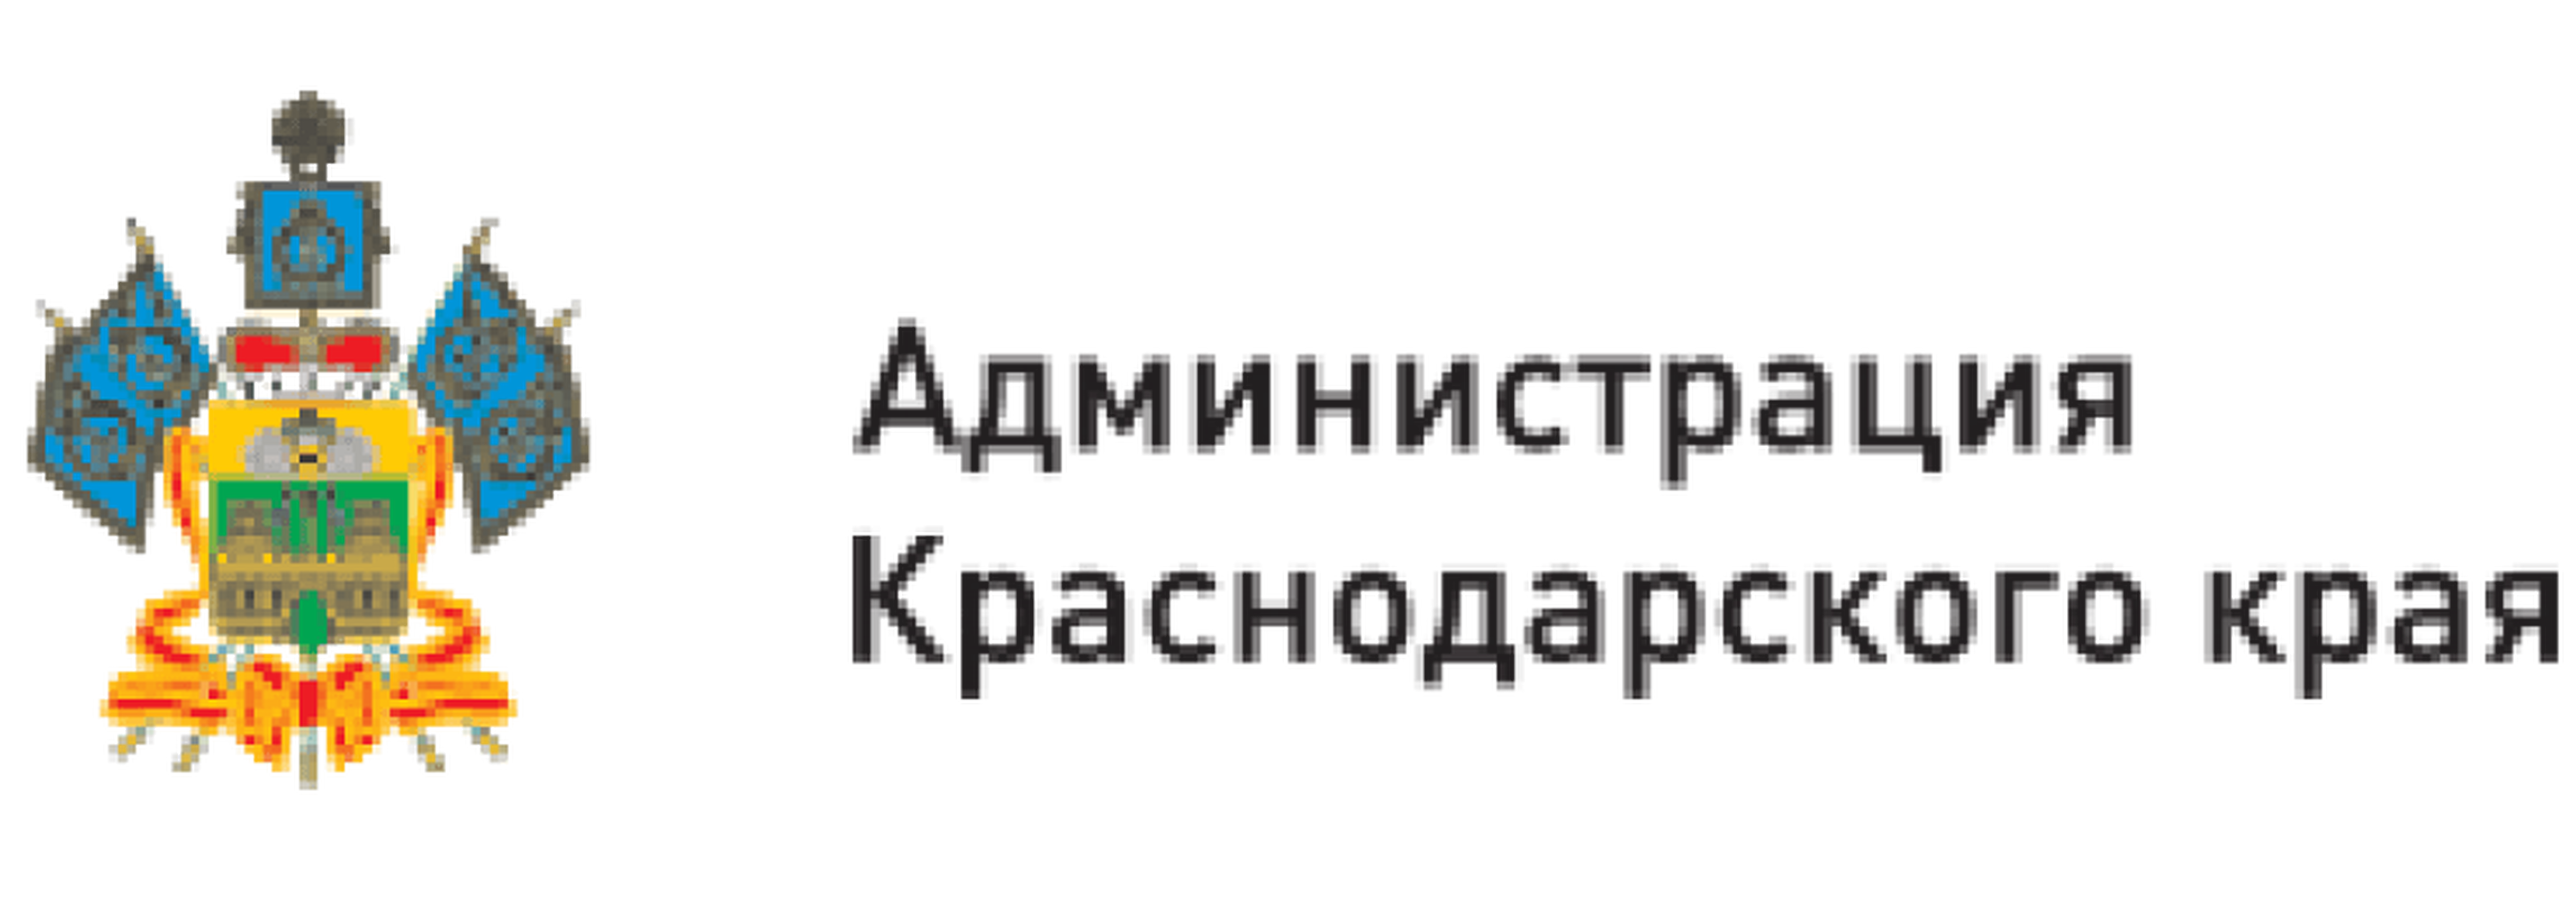 Администрация Краснодарского края лого. Правительство Краснодарского края логотип. Администрация Краснодарского края эмблема. Администрация краснодара телефон